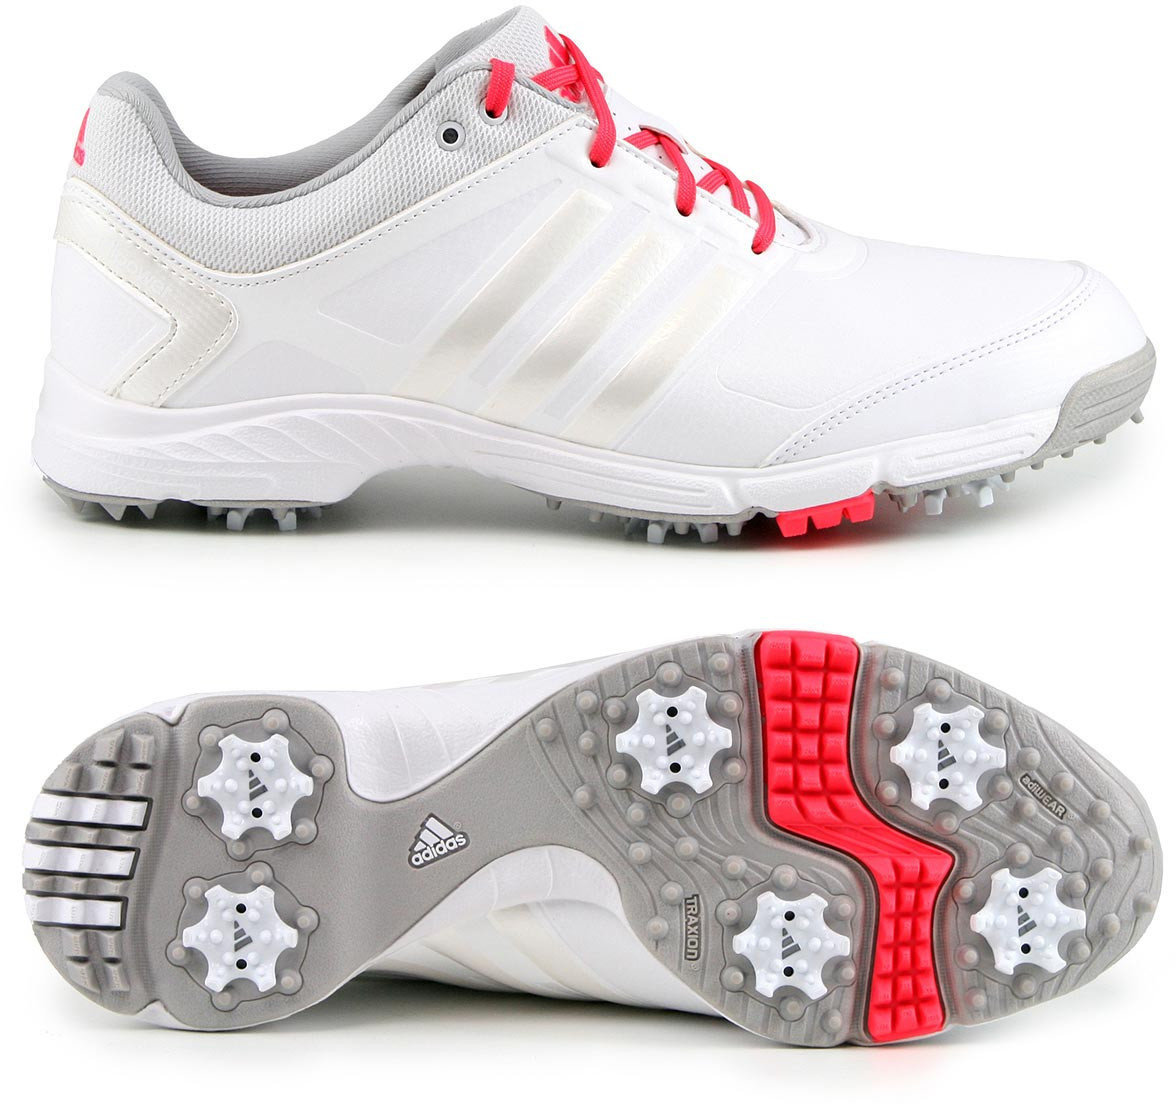 Women's golf shoes Adidas Adipower Tour Mens Golf Shoes White/Metallic/Shock Red UK 4